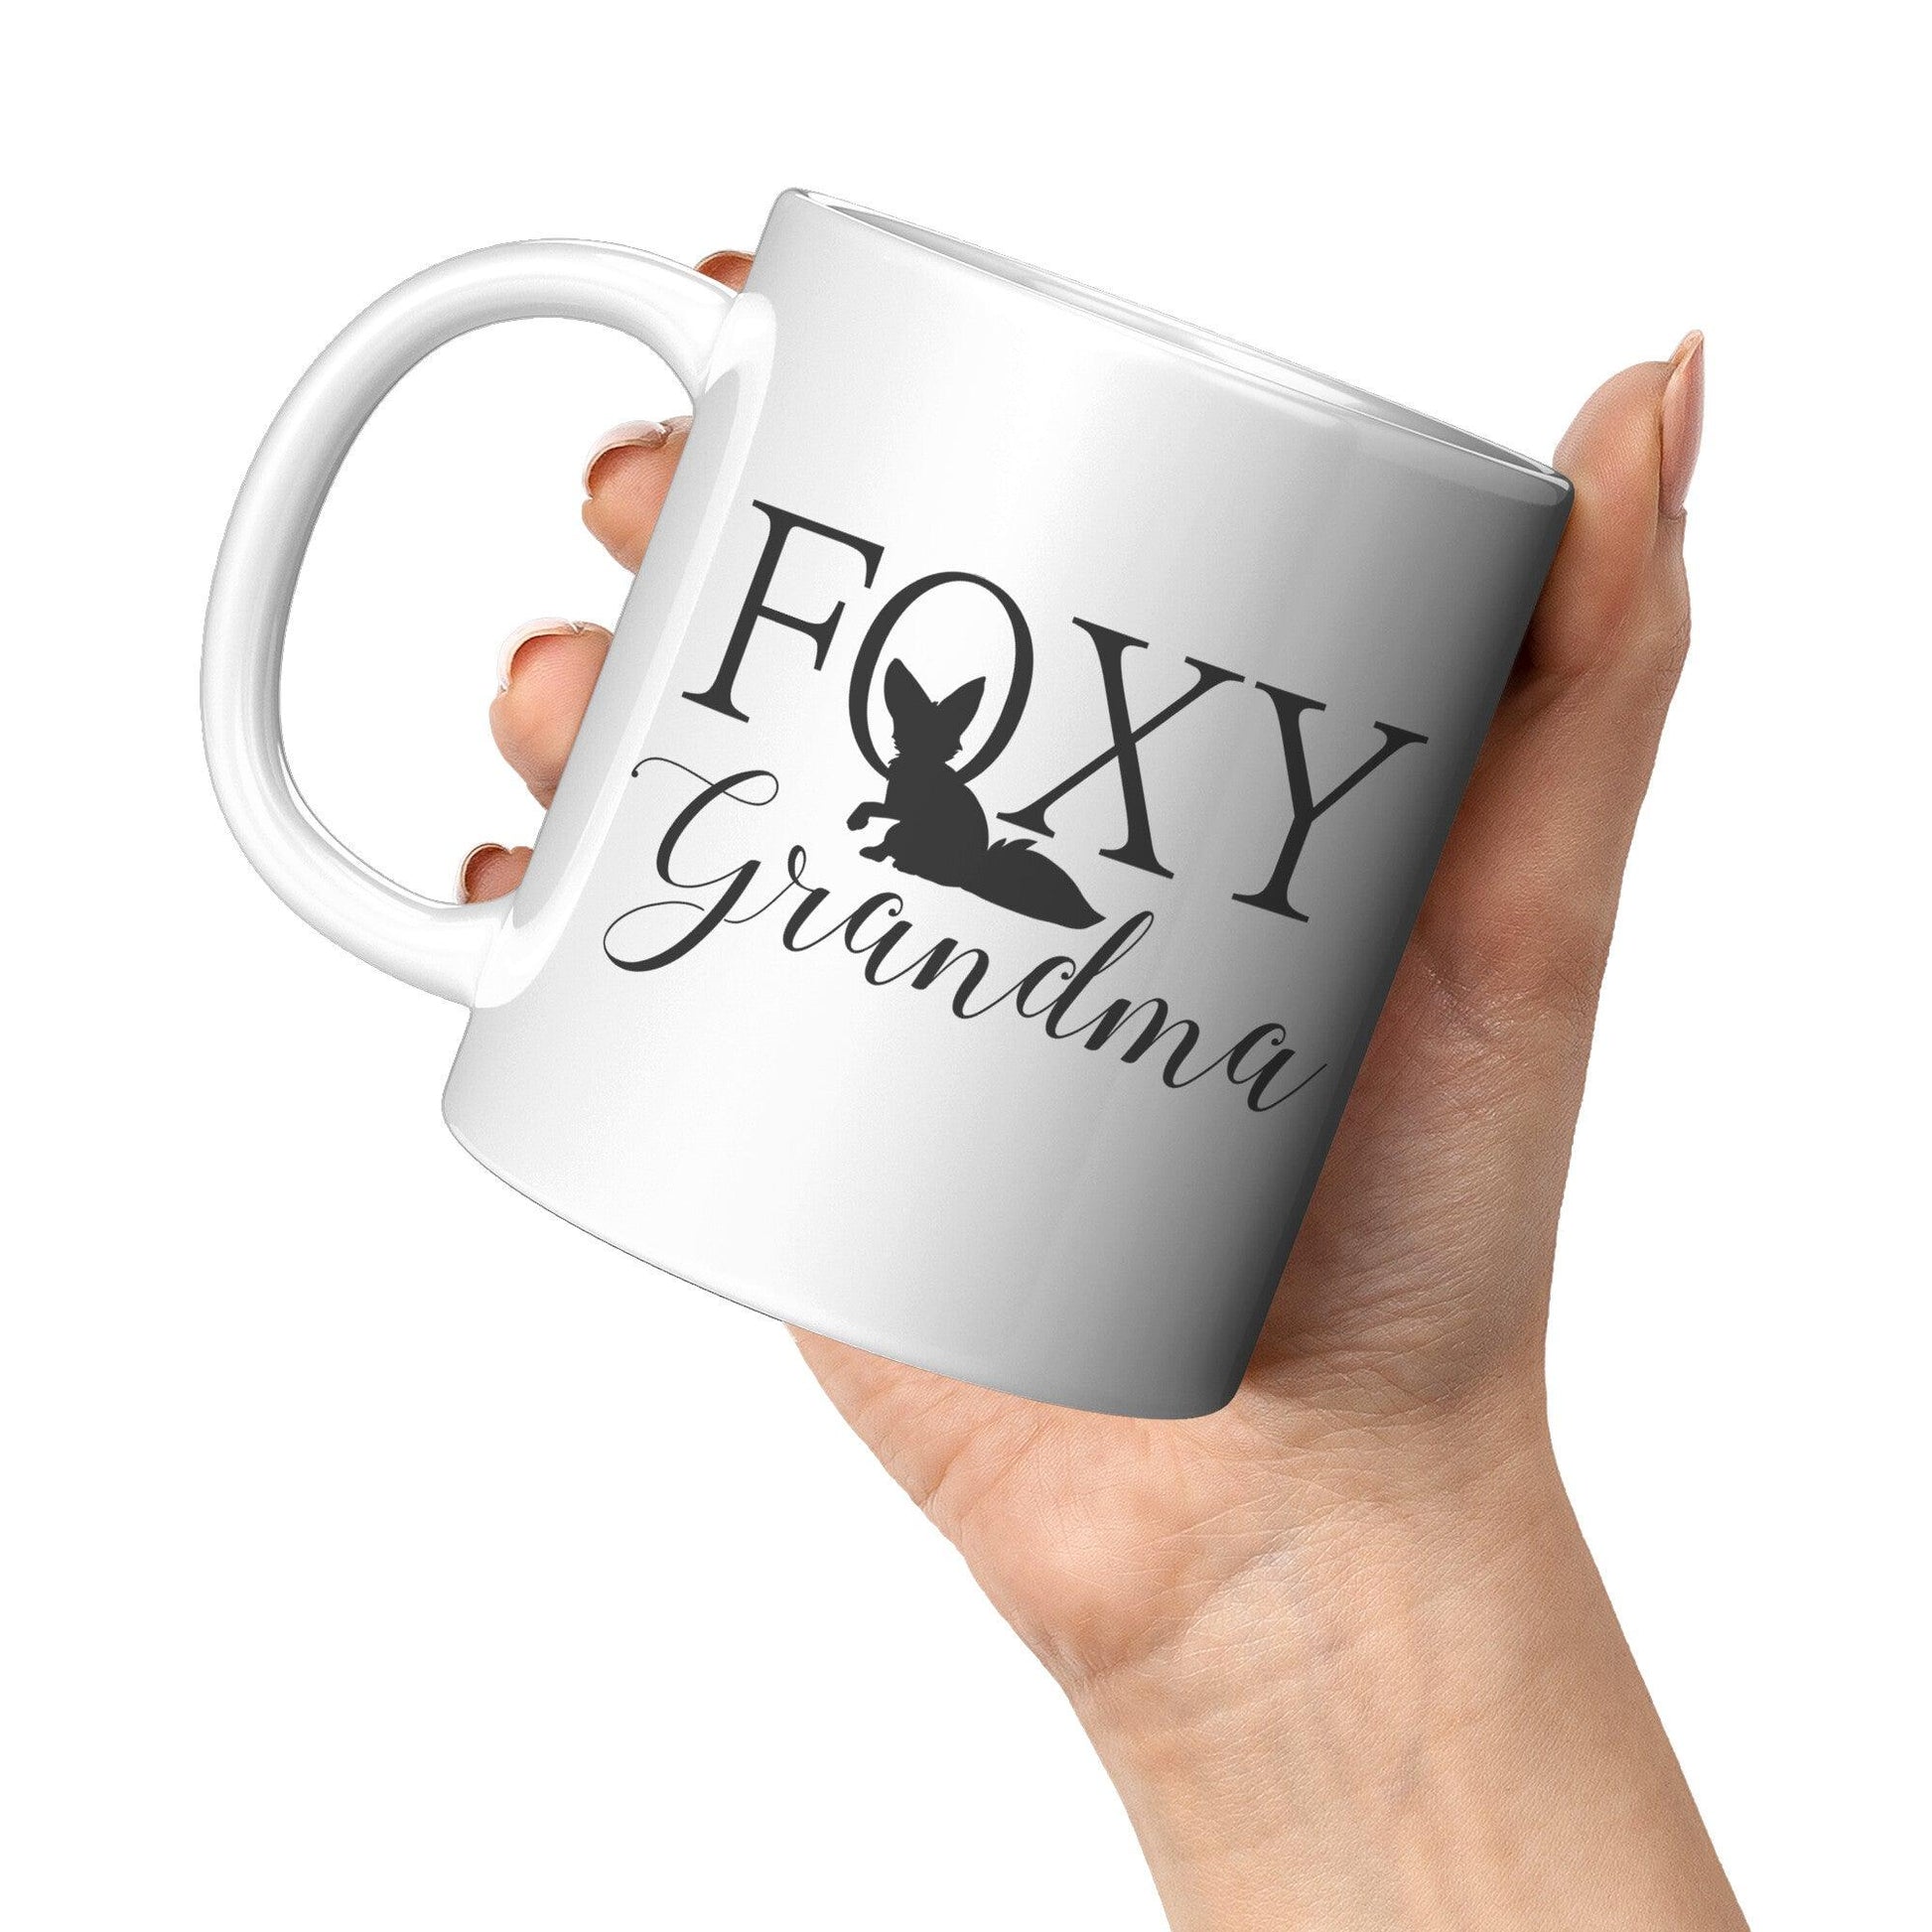 Foxy Grandma White Mug - TheGivenGet